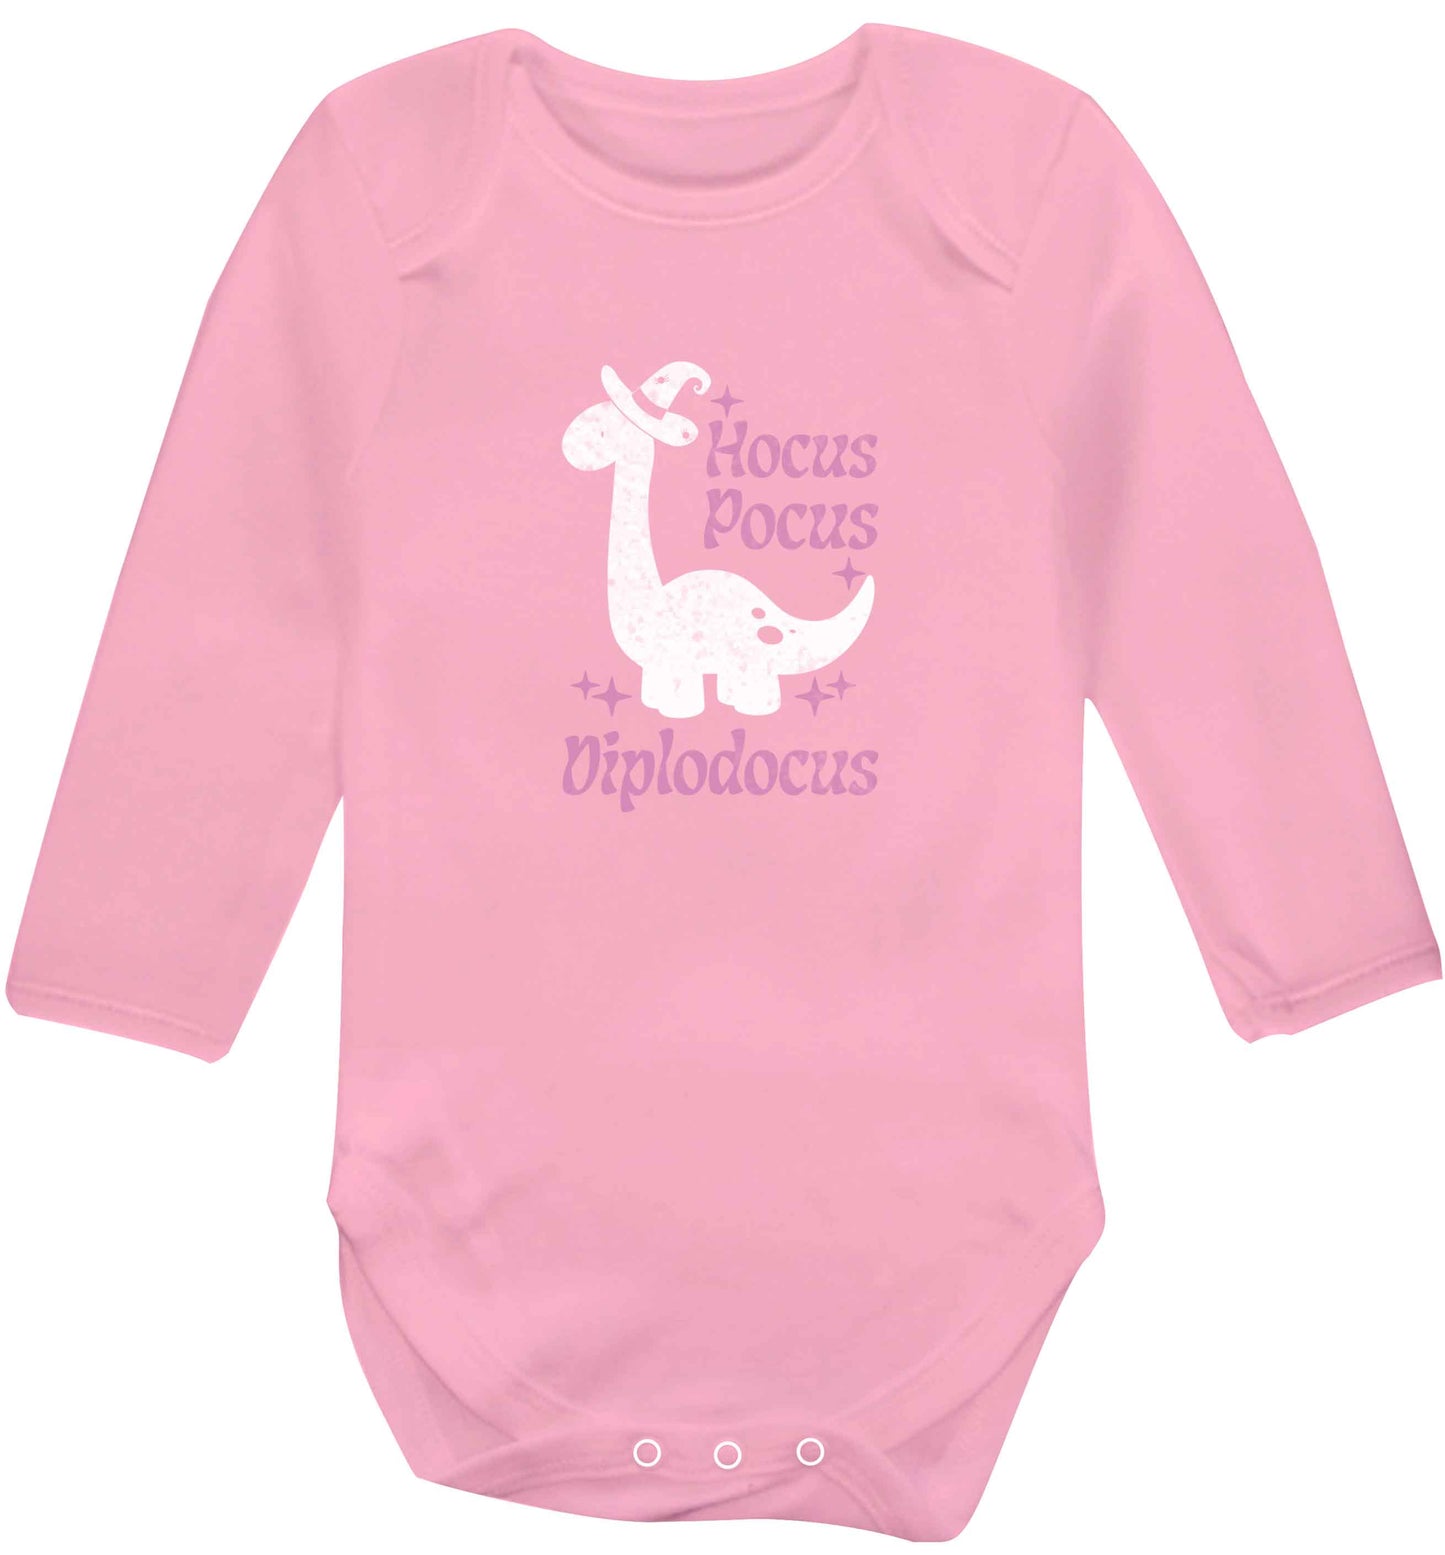 Hocus pocus diplodocus Kit baby vest long sleeved pale pink 6-12 months